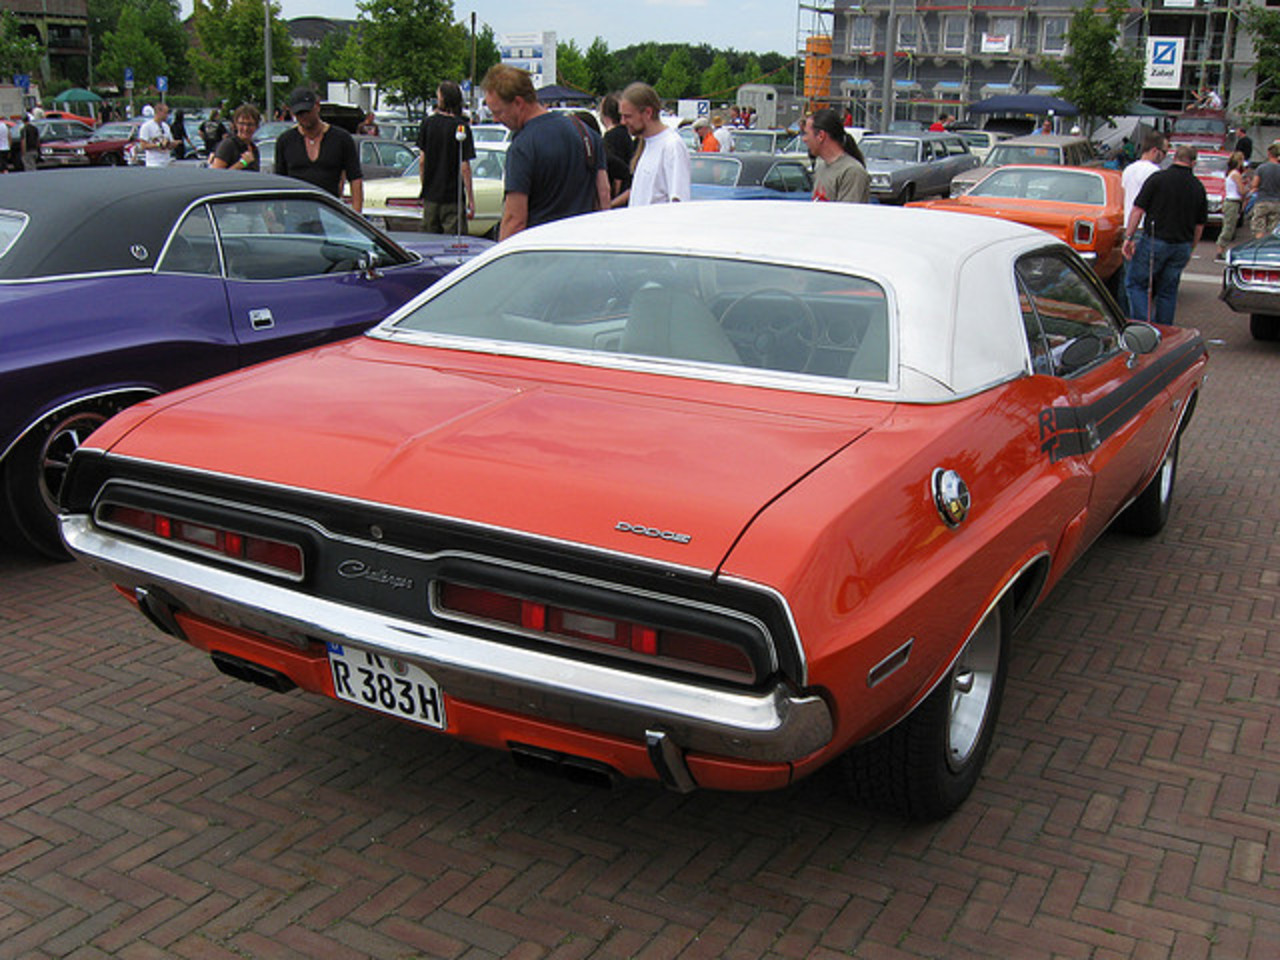 Dodge Challenger RT 383 1971 | Flickr - Photo Sharing!